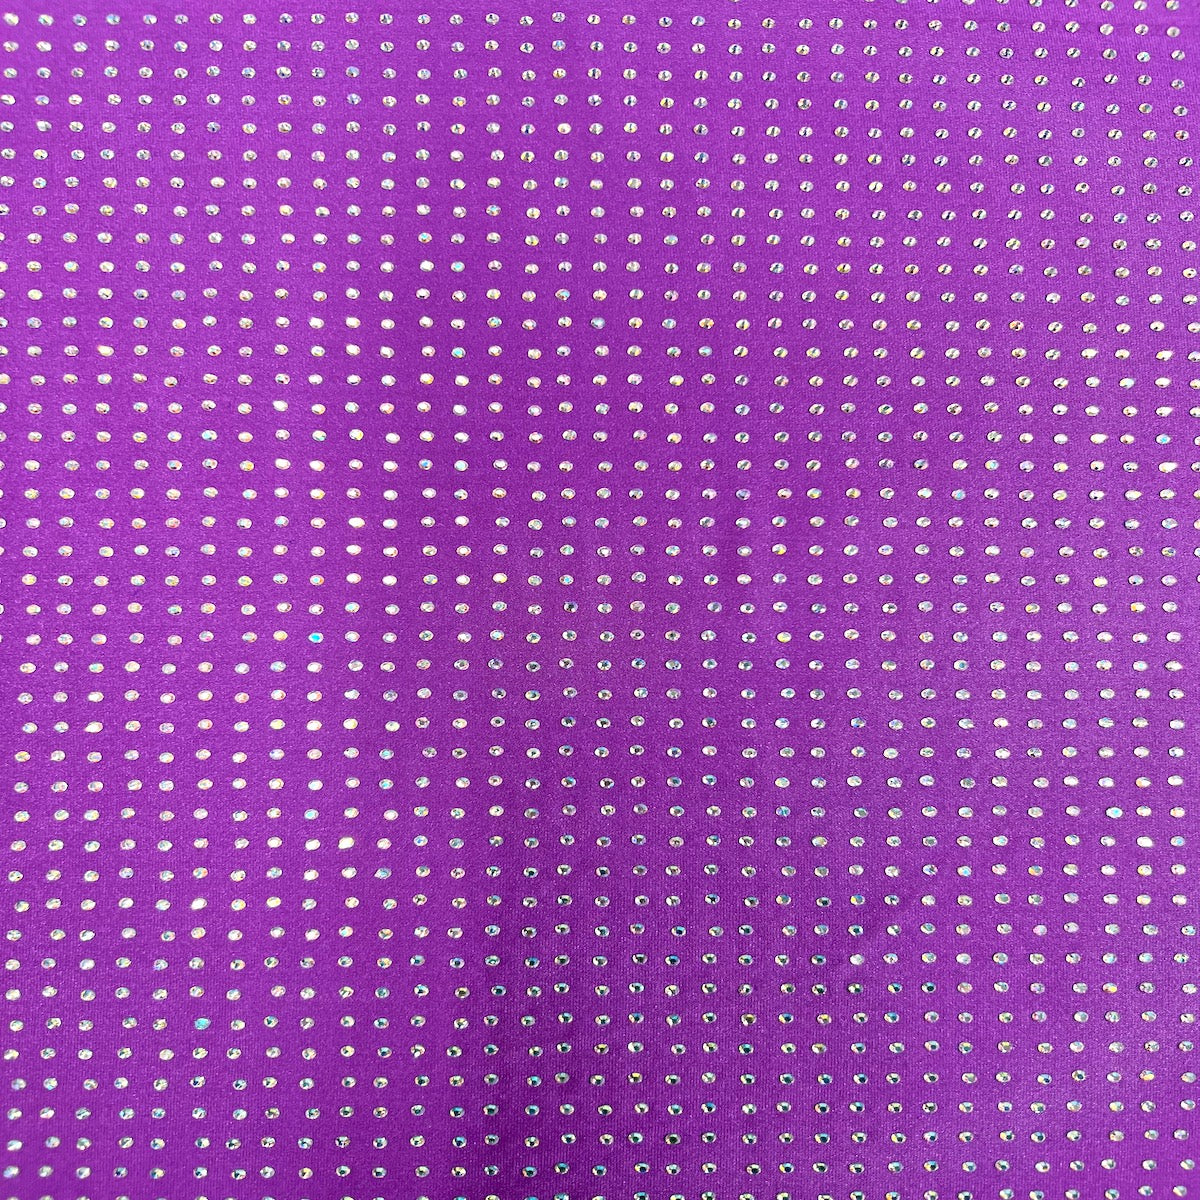 Tissu spandex violet irisé avec strass AB